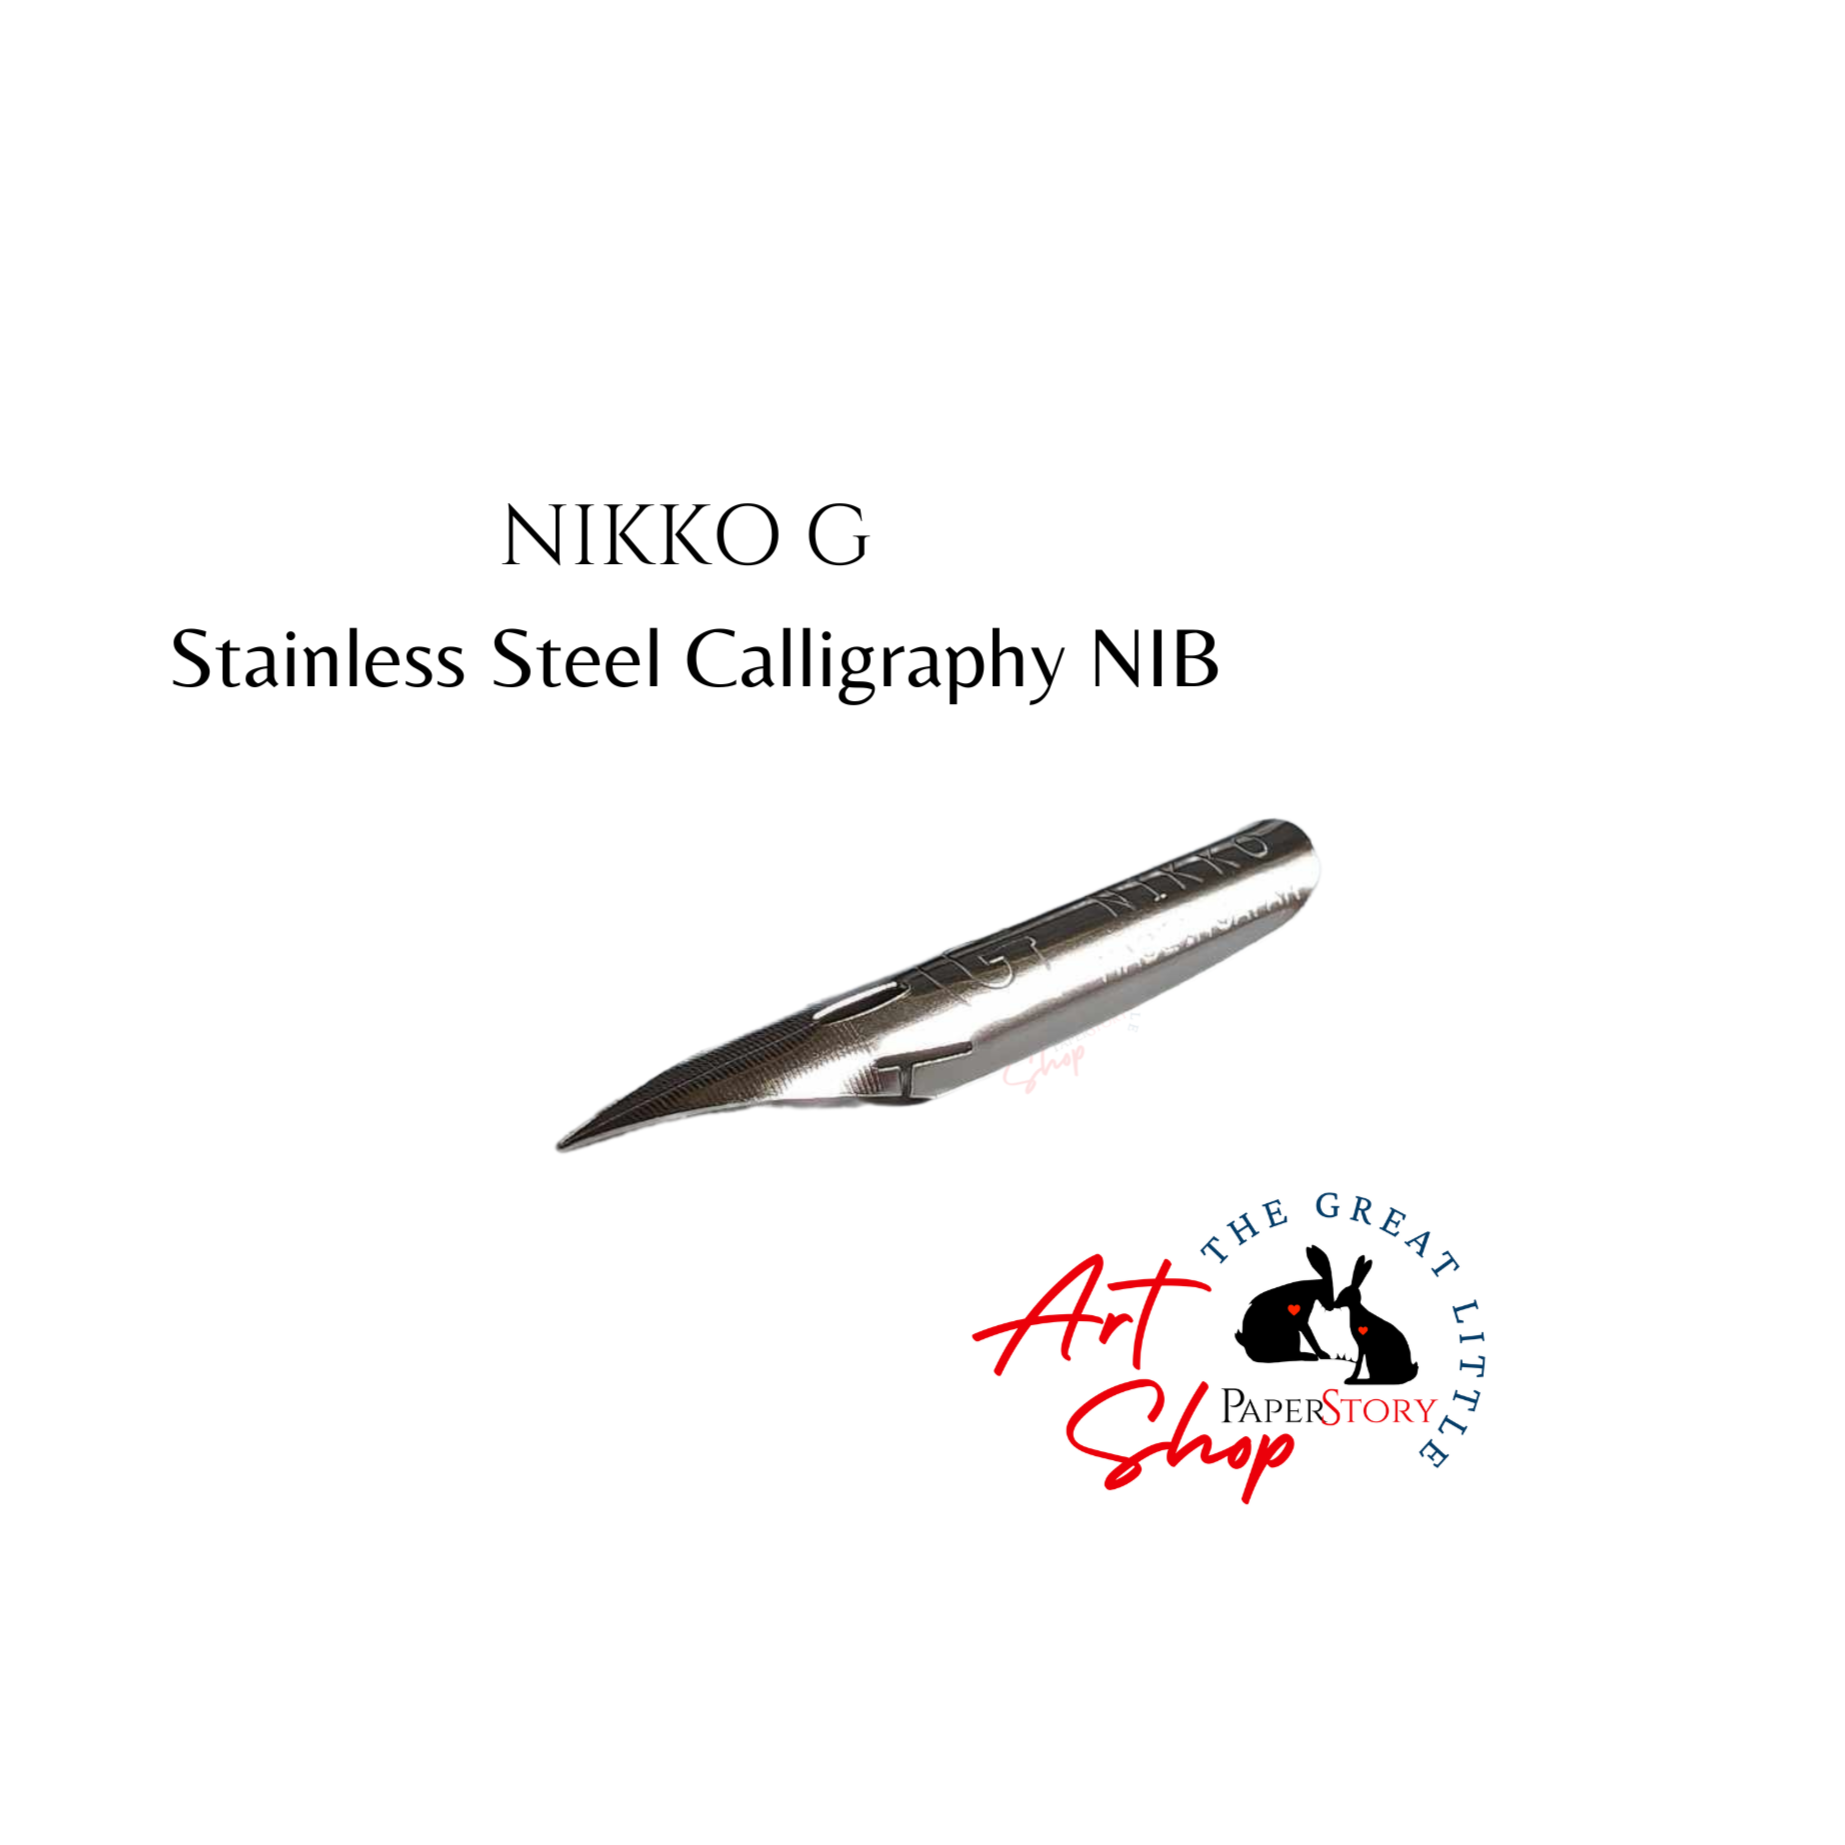 NIKKO G Stainless Steel Calligraphy Nibs